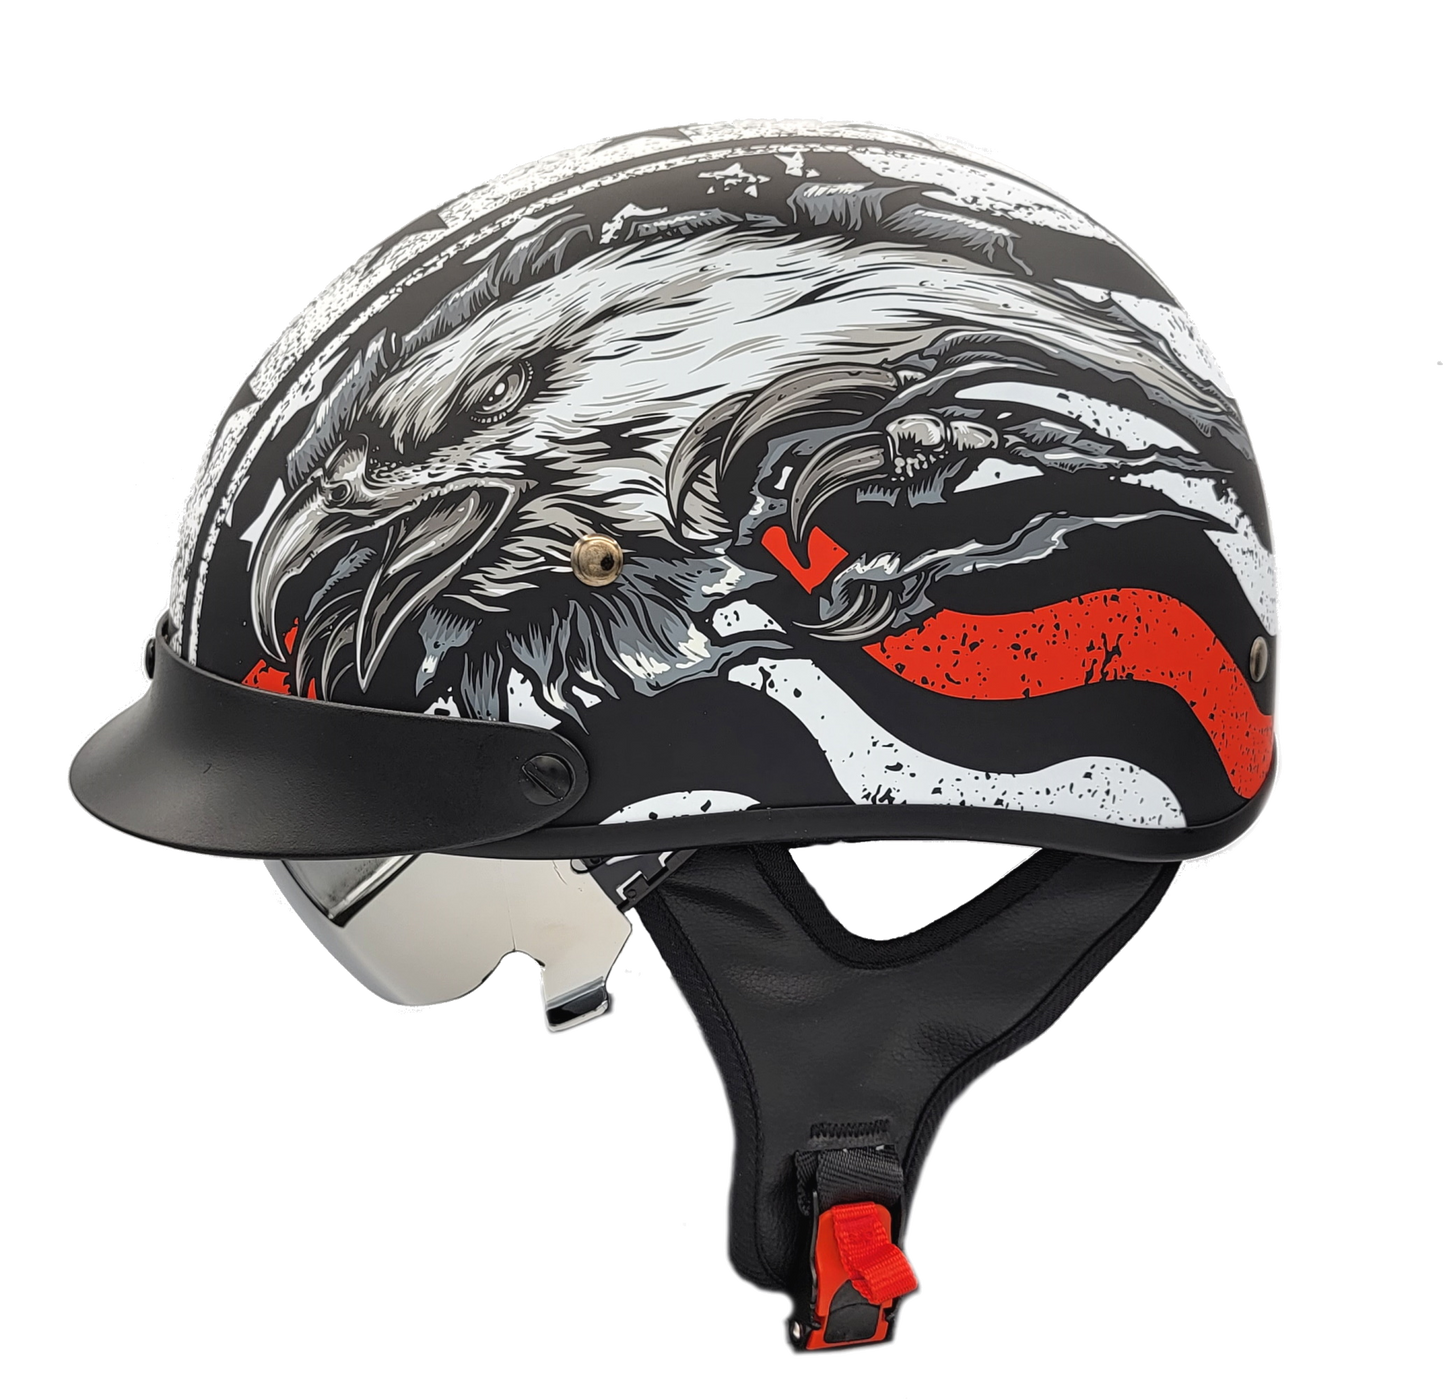 Vega Warrior Half Helmet with dropdown shield and sunvisor - Eagle